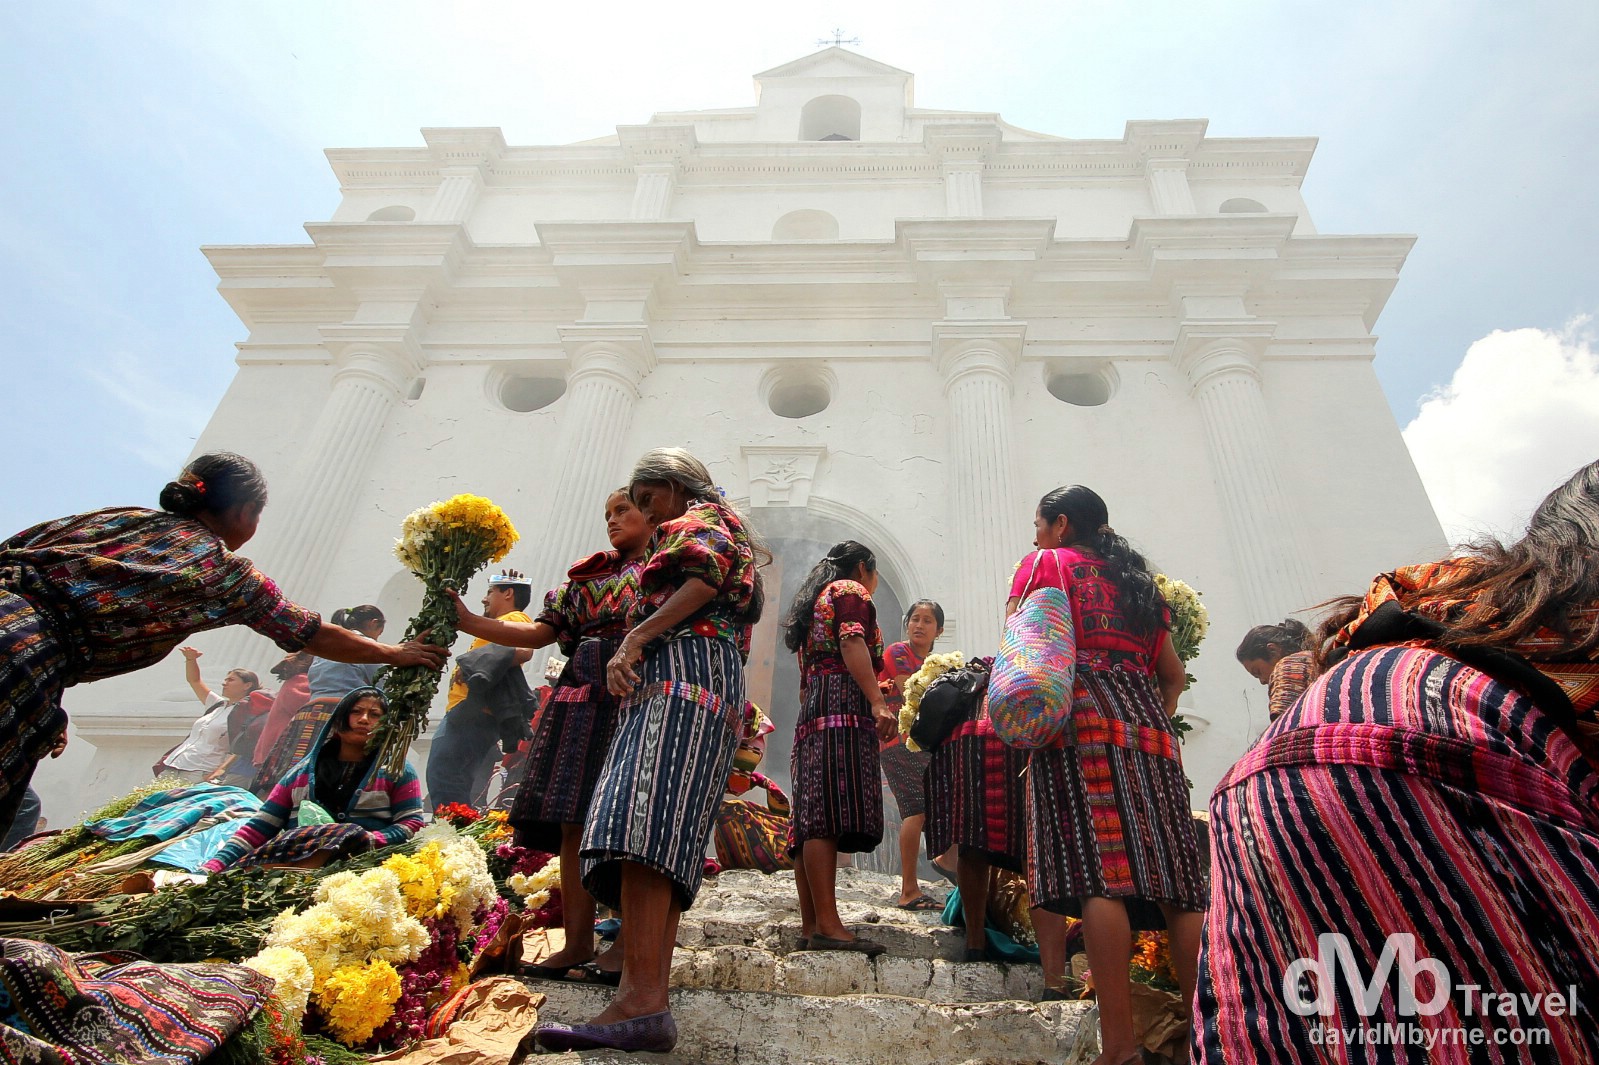 On the steps of Iglesia De Santo Tomas (Church of Saint Thomas), Chichicastenango (Chichi), Guatemala. May 23rd 2013.